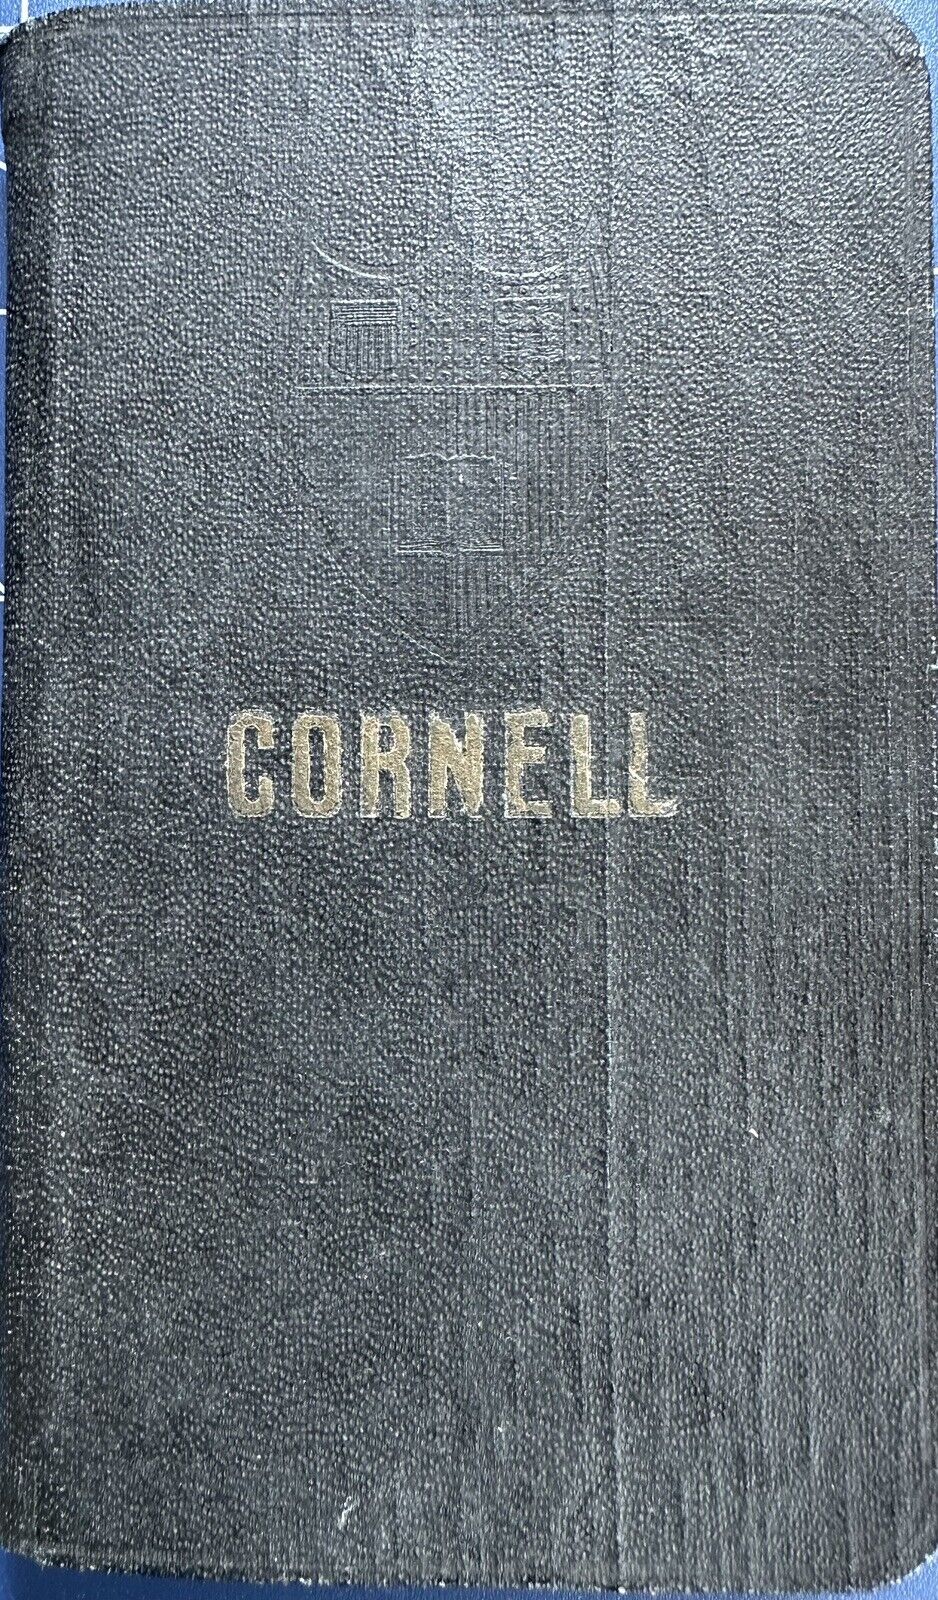 Antique CORNELL UNIVERSITY Freshman Handbook 1926-27 (Class 1930)